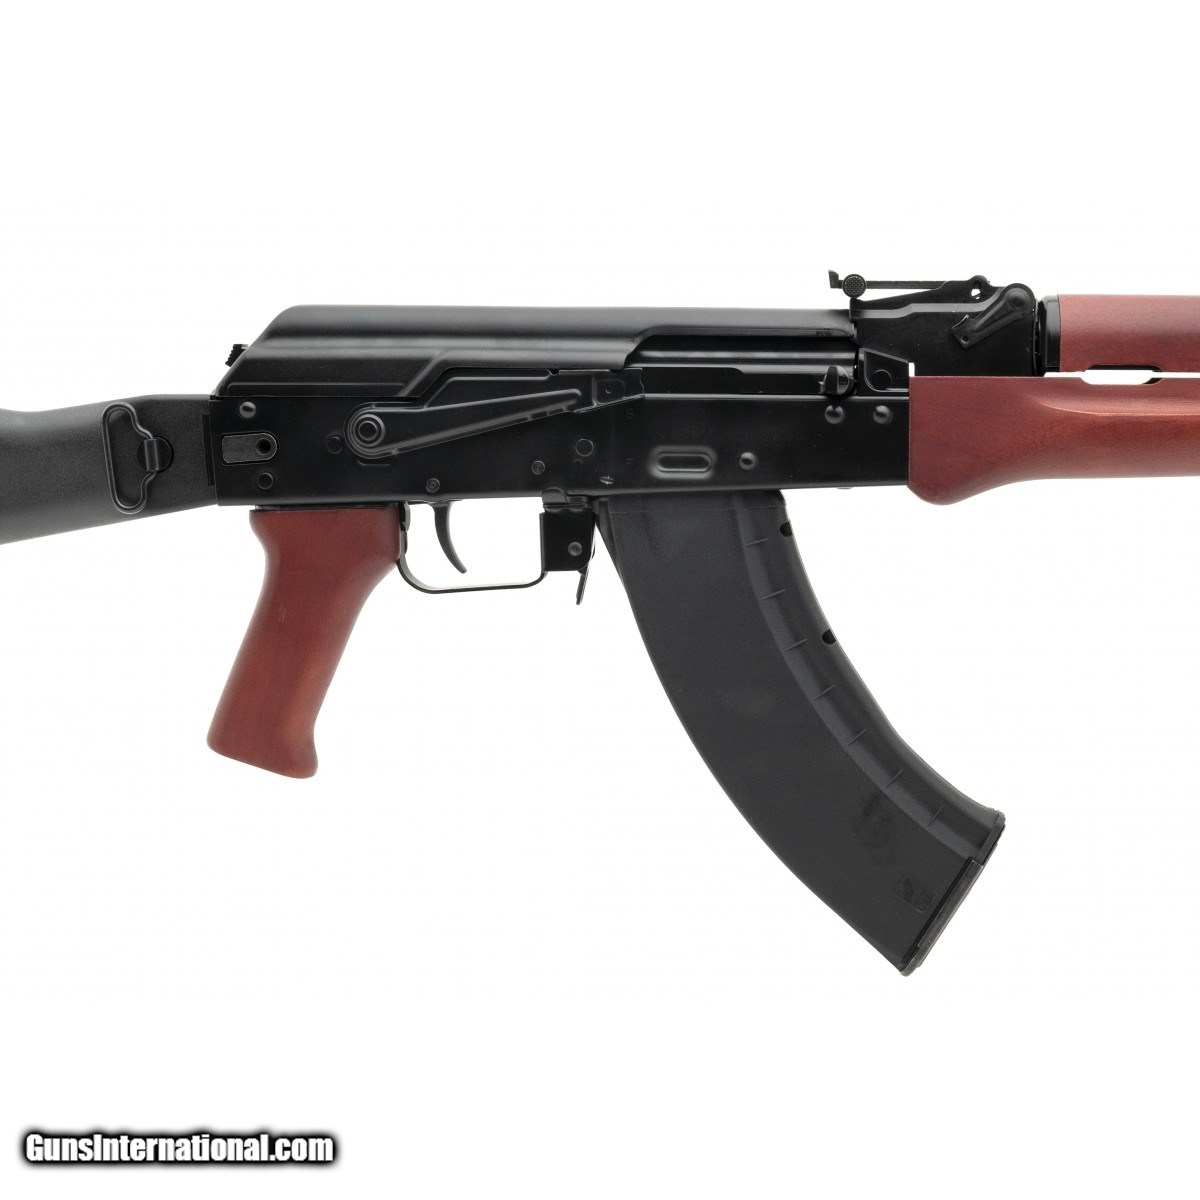 KALASHNIKOV USA 7.62x39MM STEEL CASE AMMUNITION - Kalashnikov USA